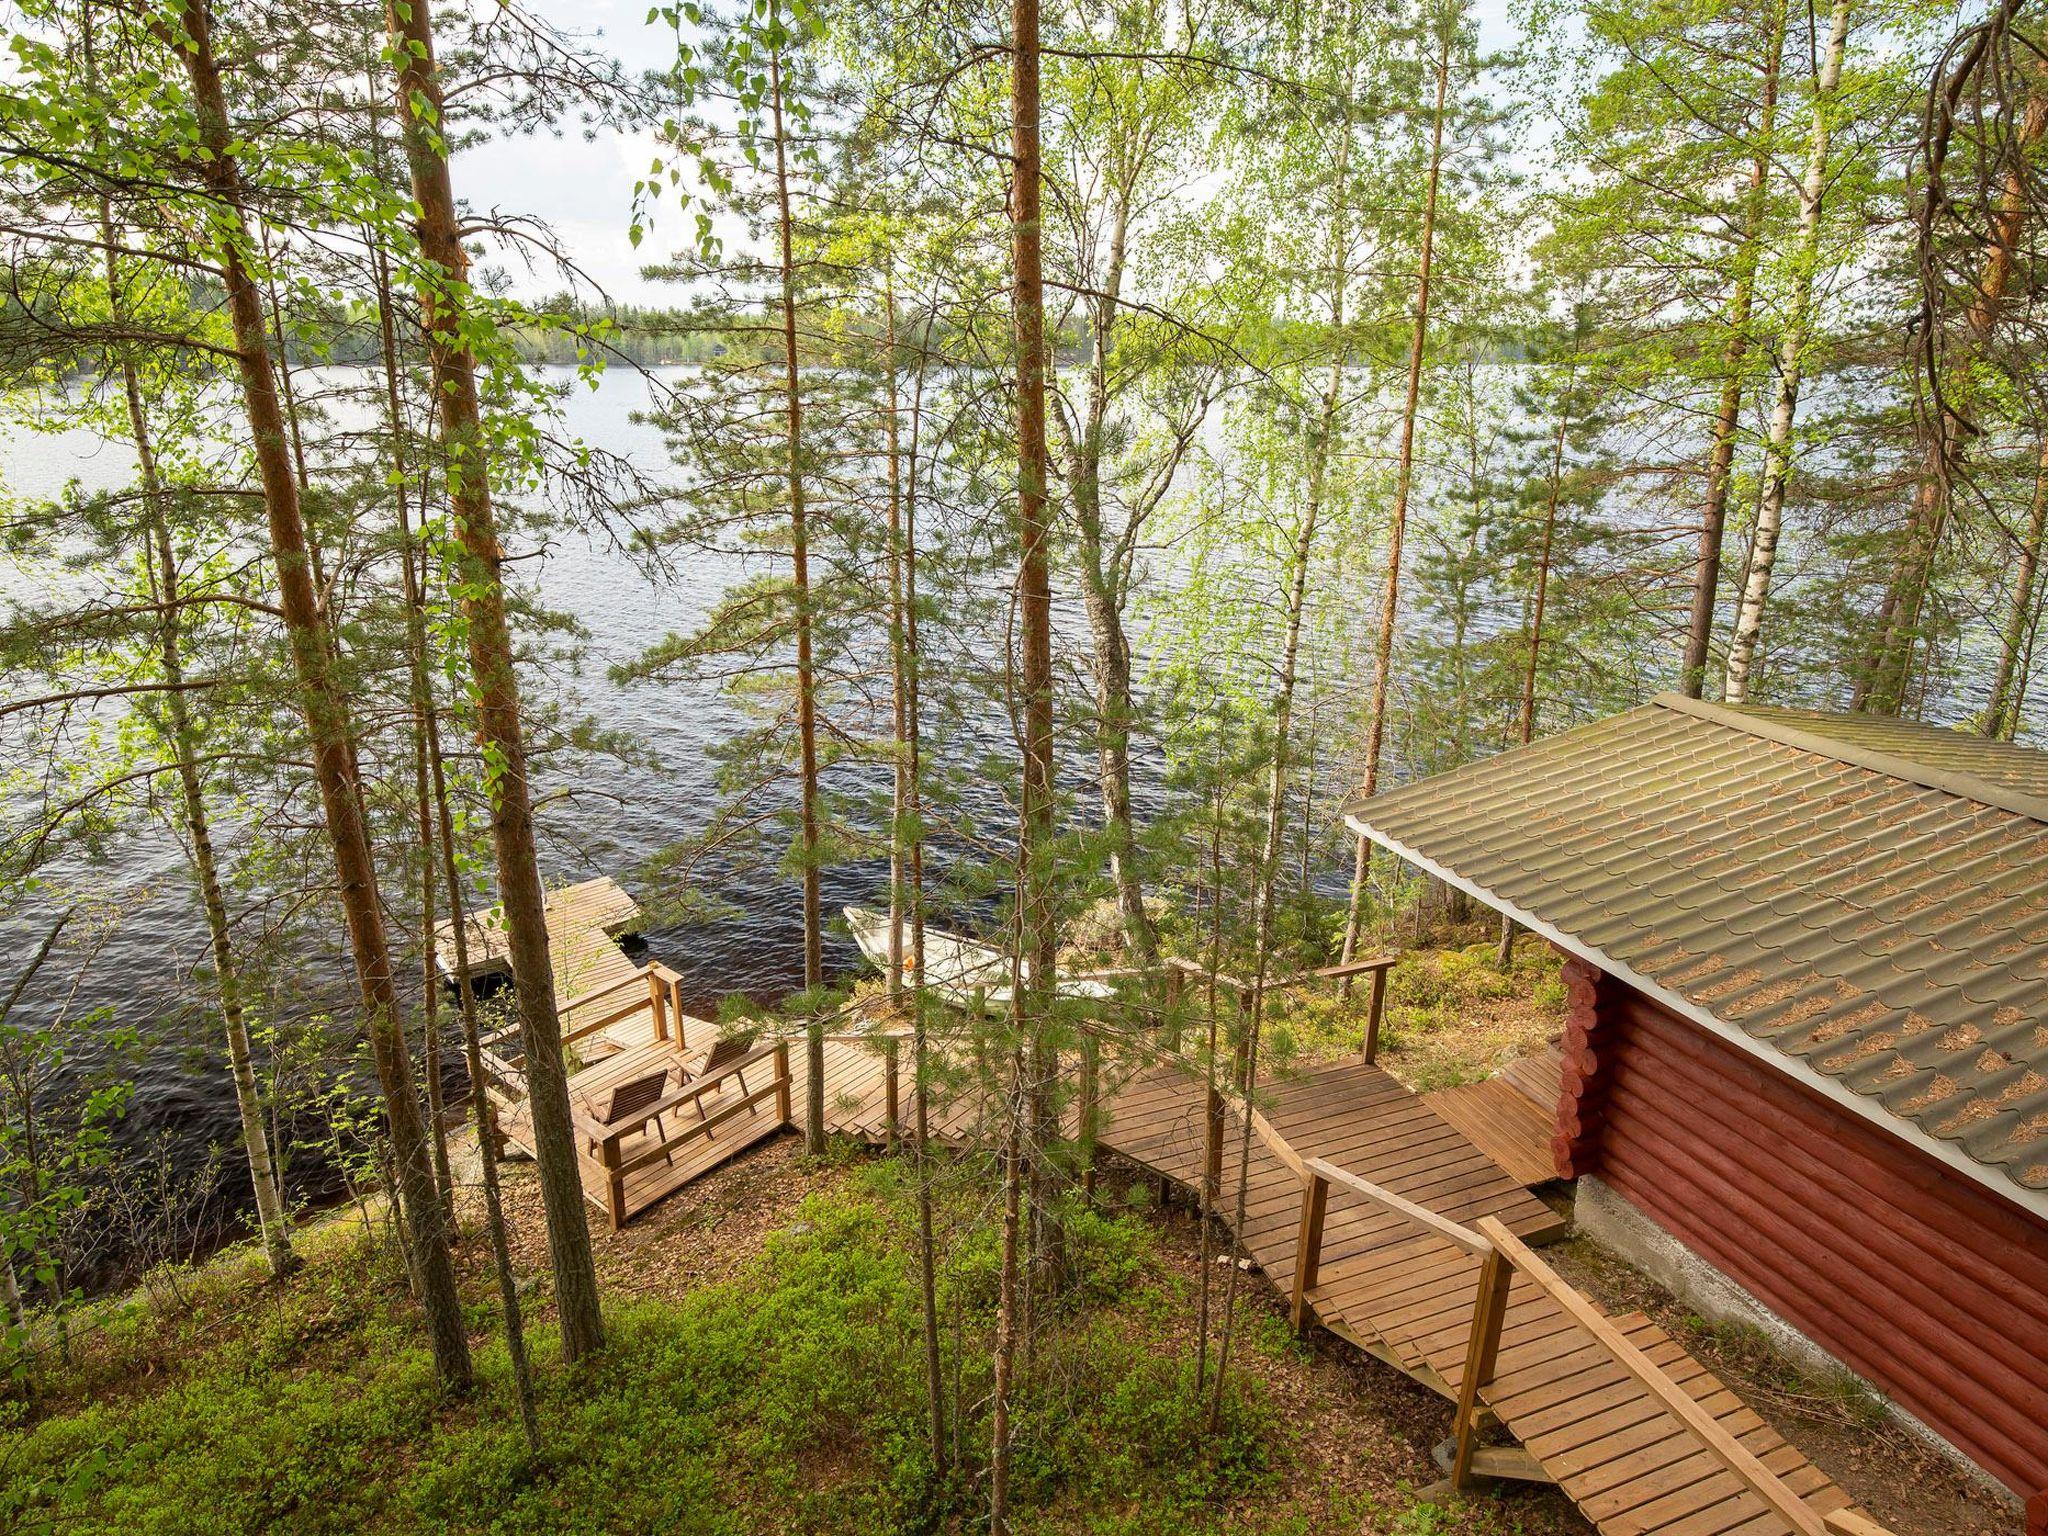 Photo 5 - 2 bedroom House in Mikkeli with sauna